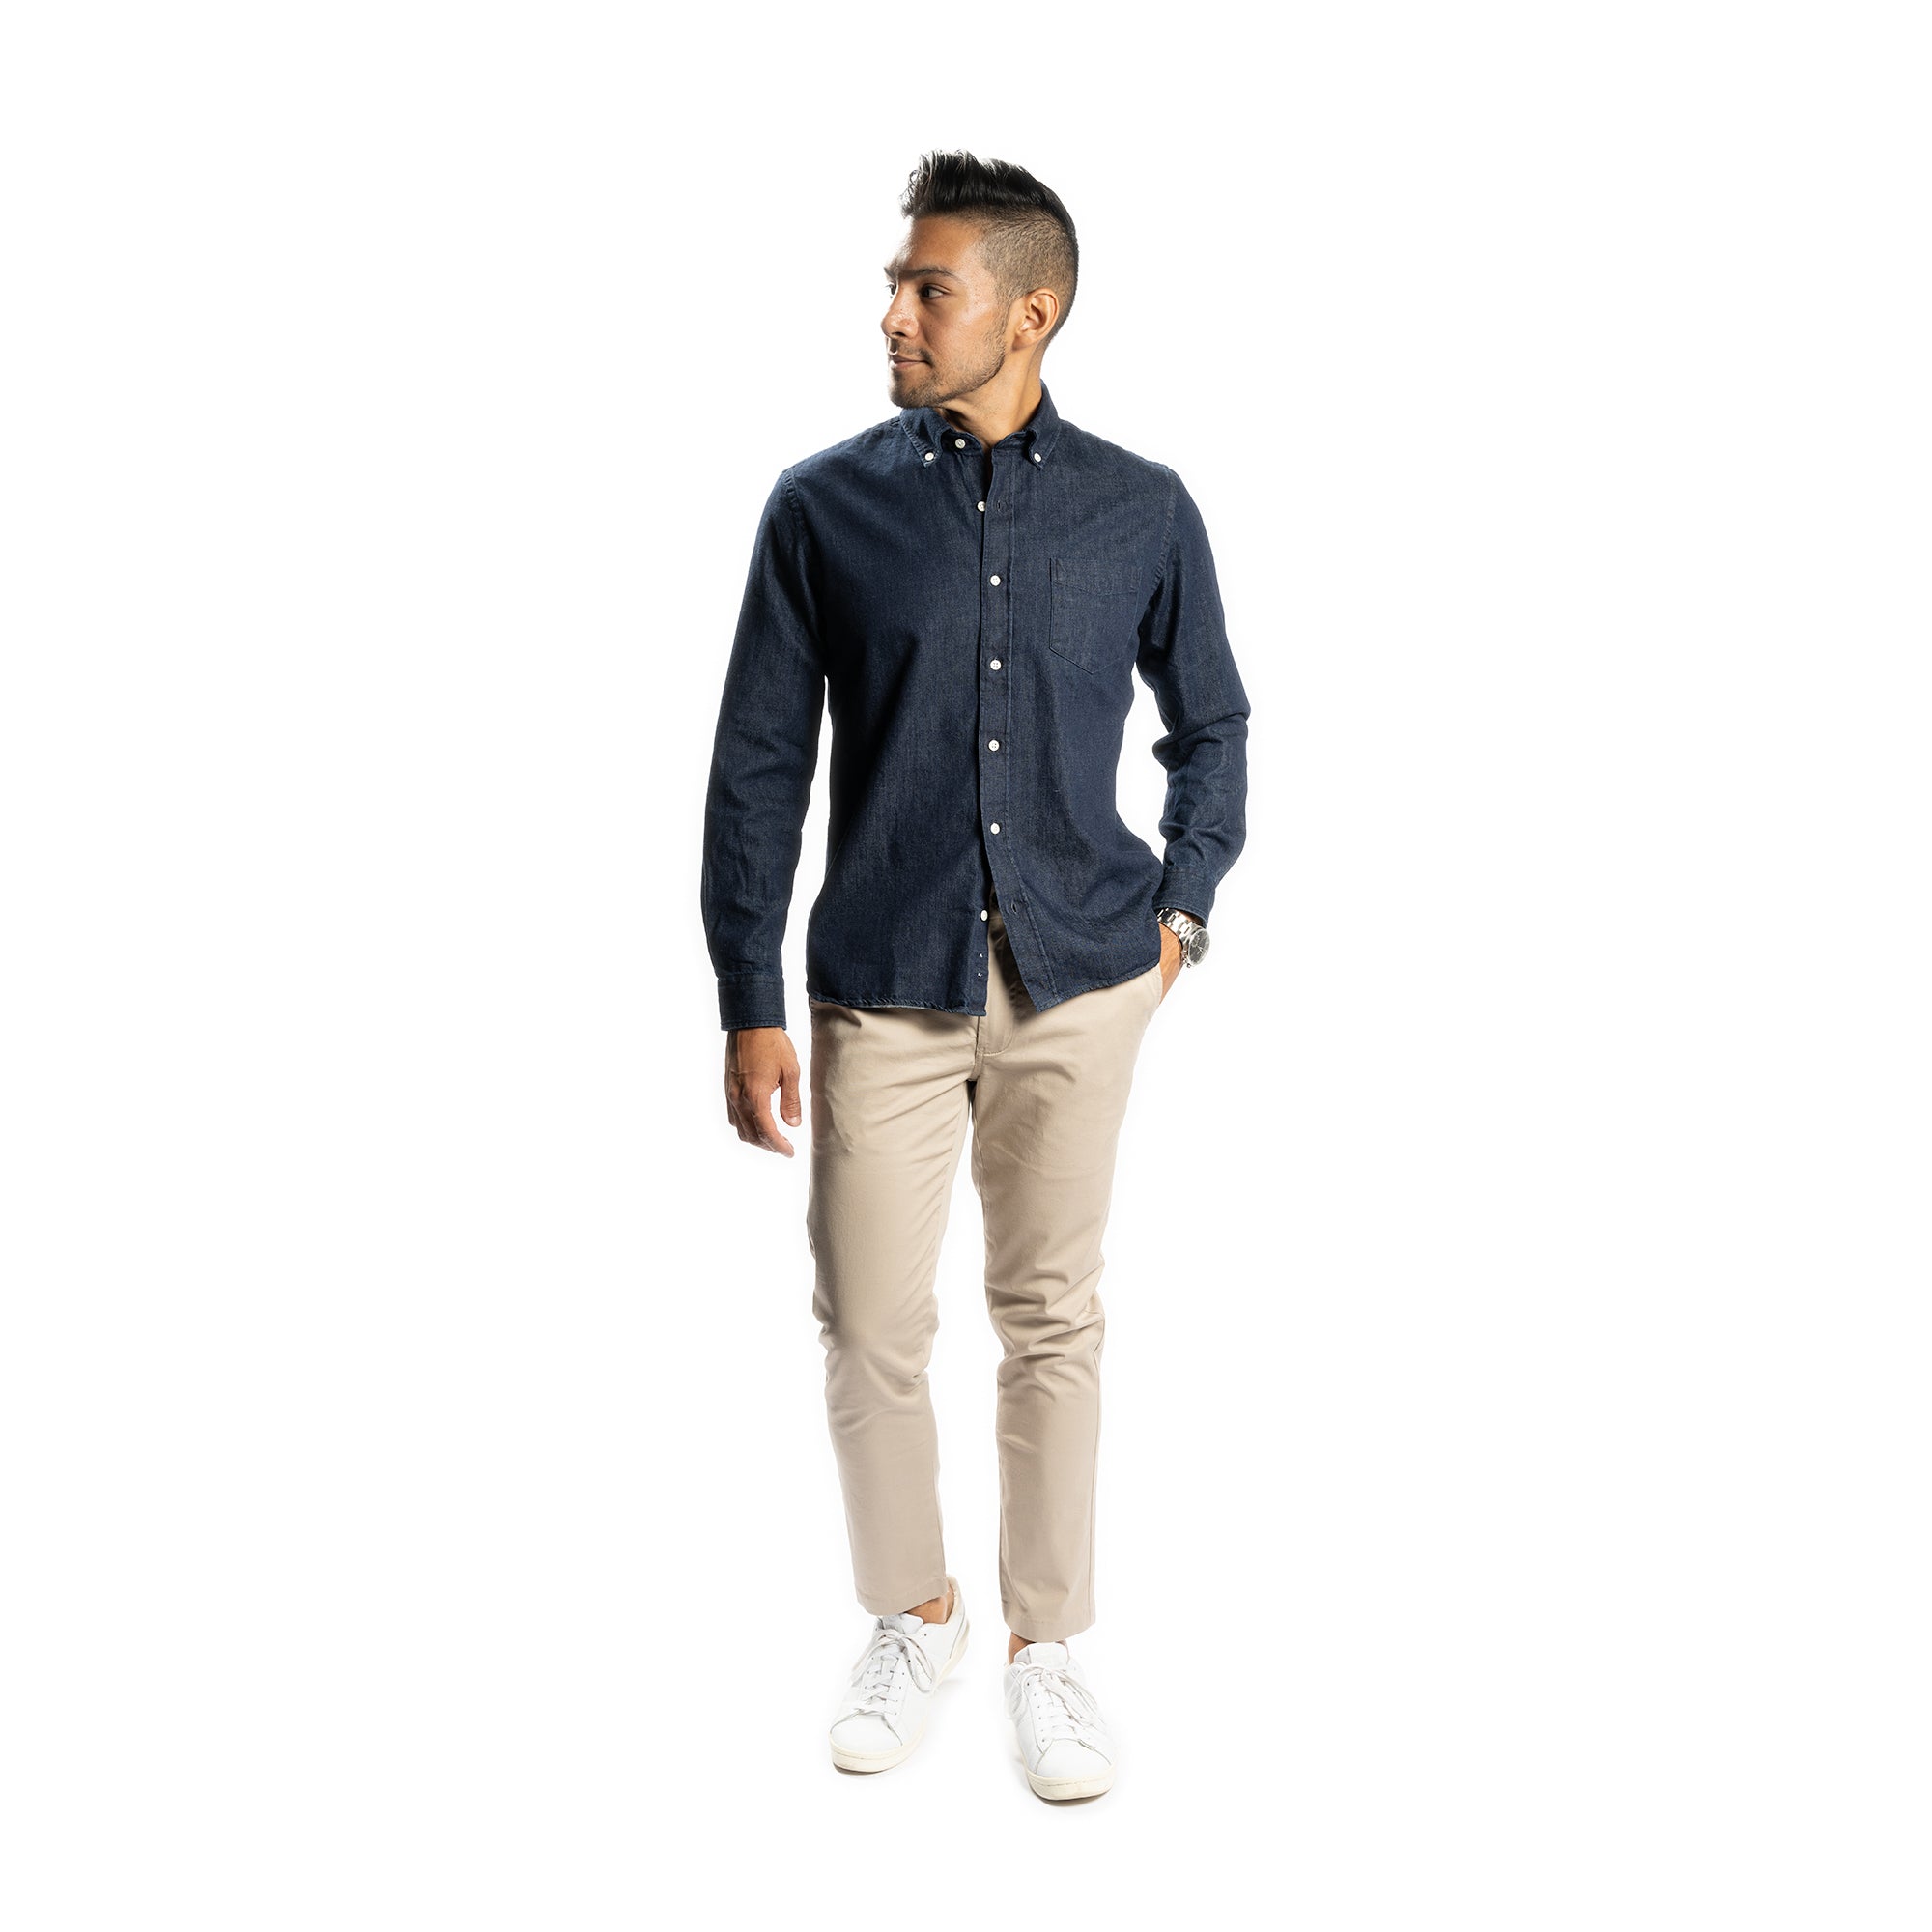 Men's Light Blue Denim Shirt, White Crew-neck T-shirt, Khaki Jeans |  Lookastic